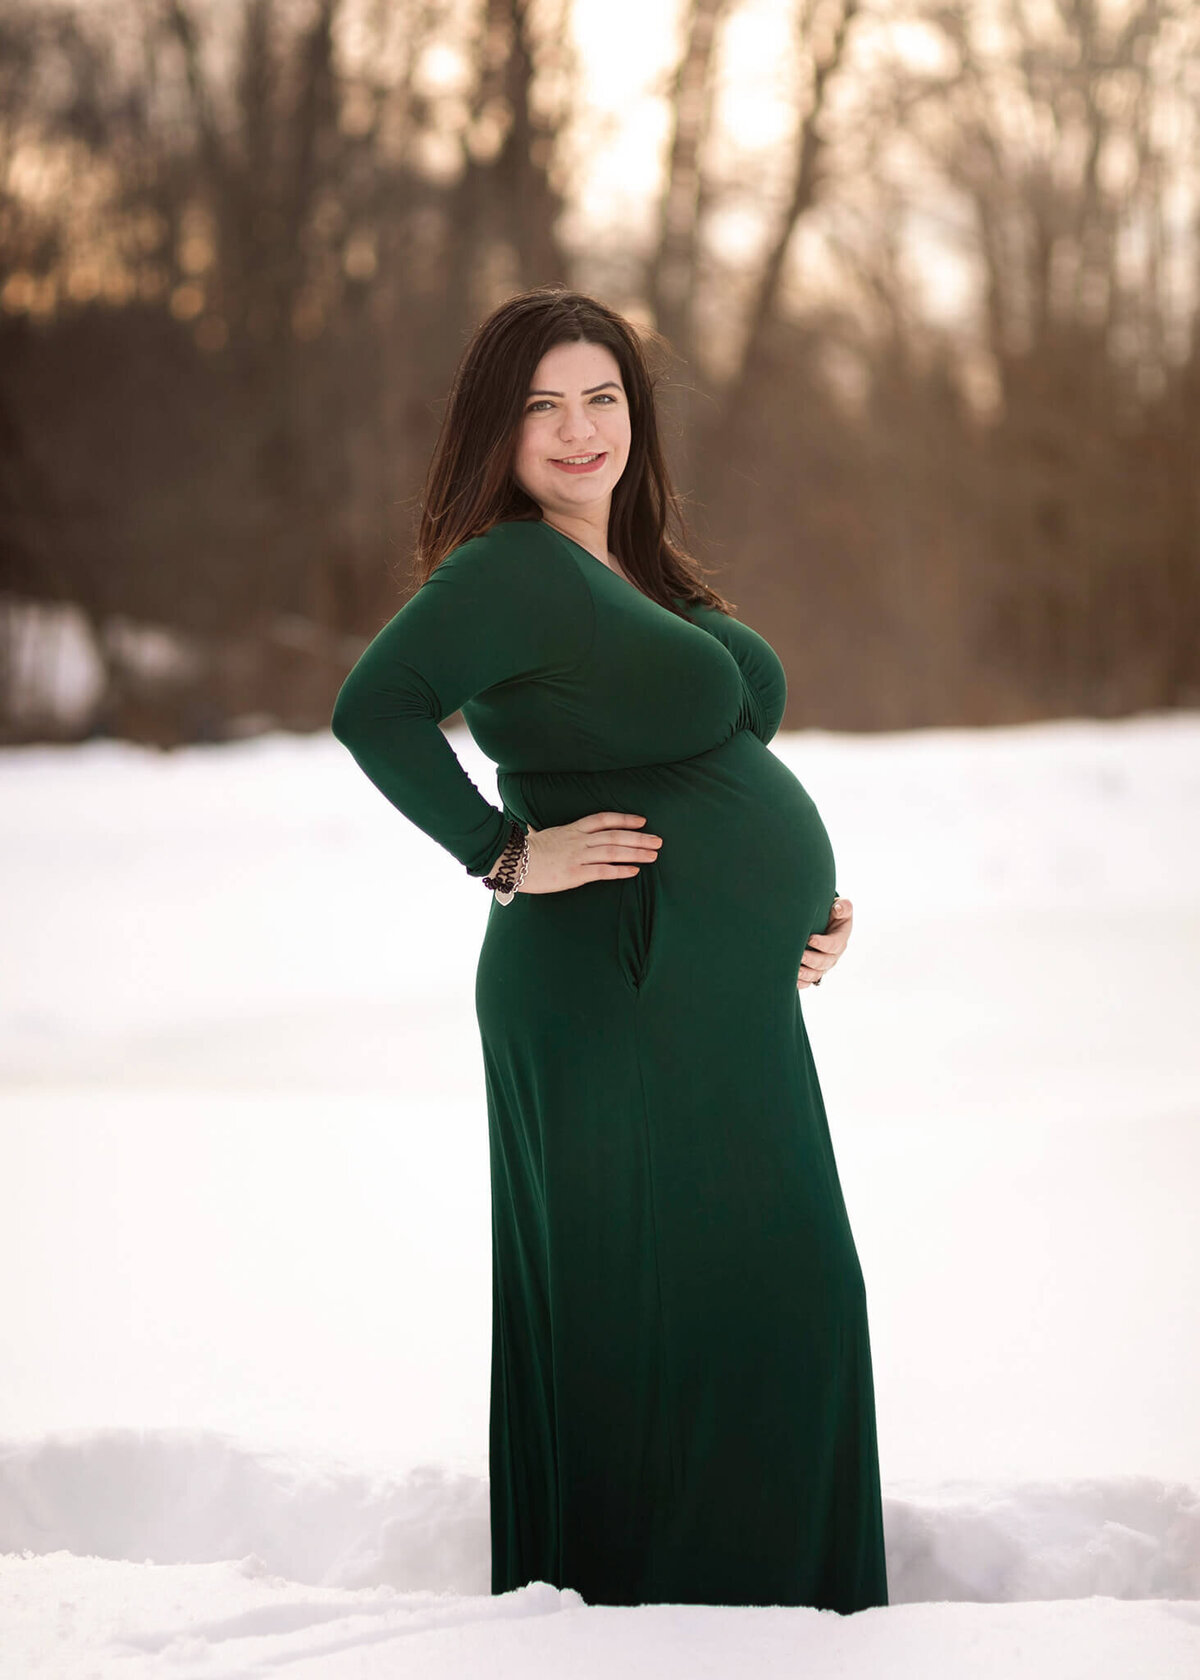 NJ Maternity photographer captures expecting mom